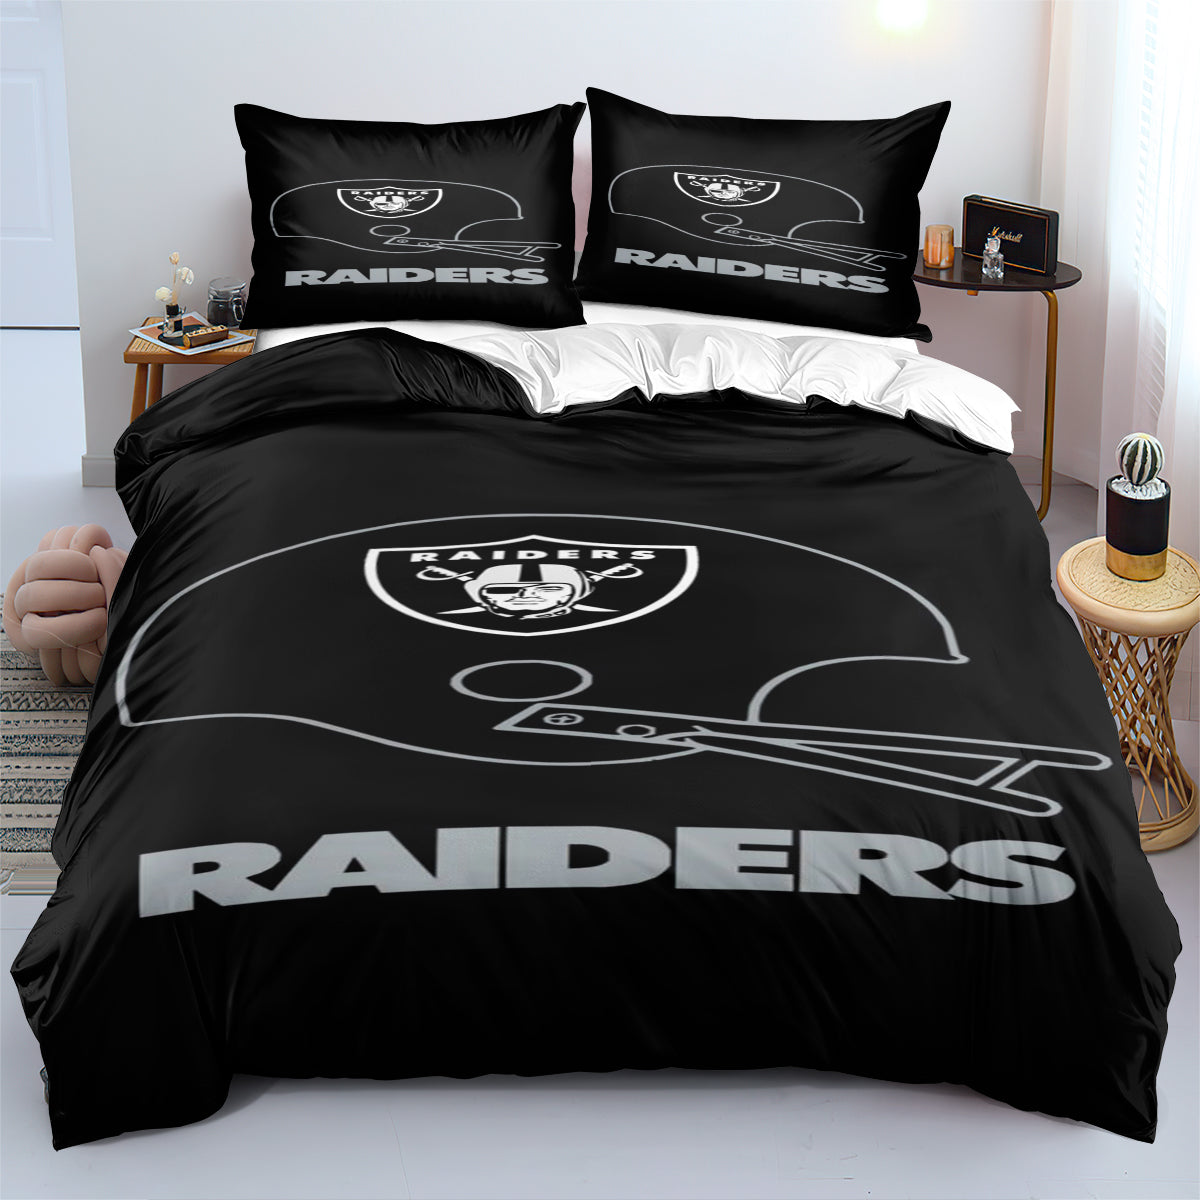 Oakland Football League Raiders Duvet Cover Quilt Cover Pillowcase Bedding Set